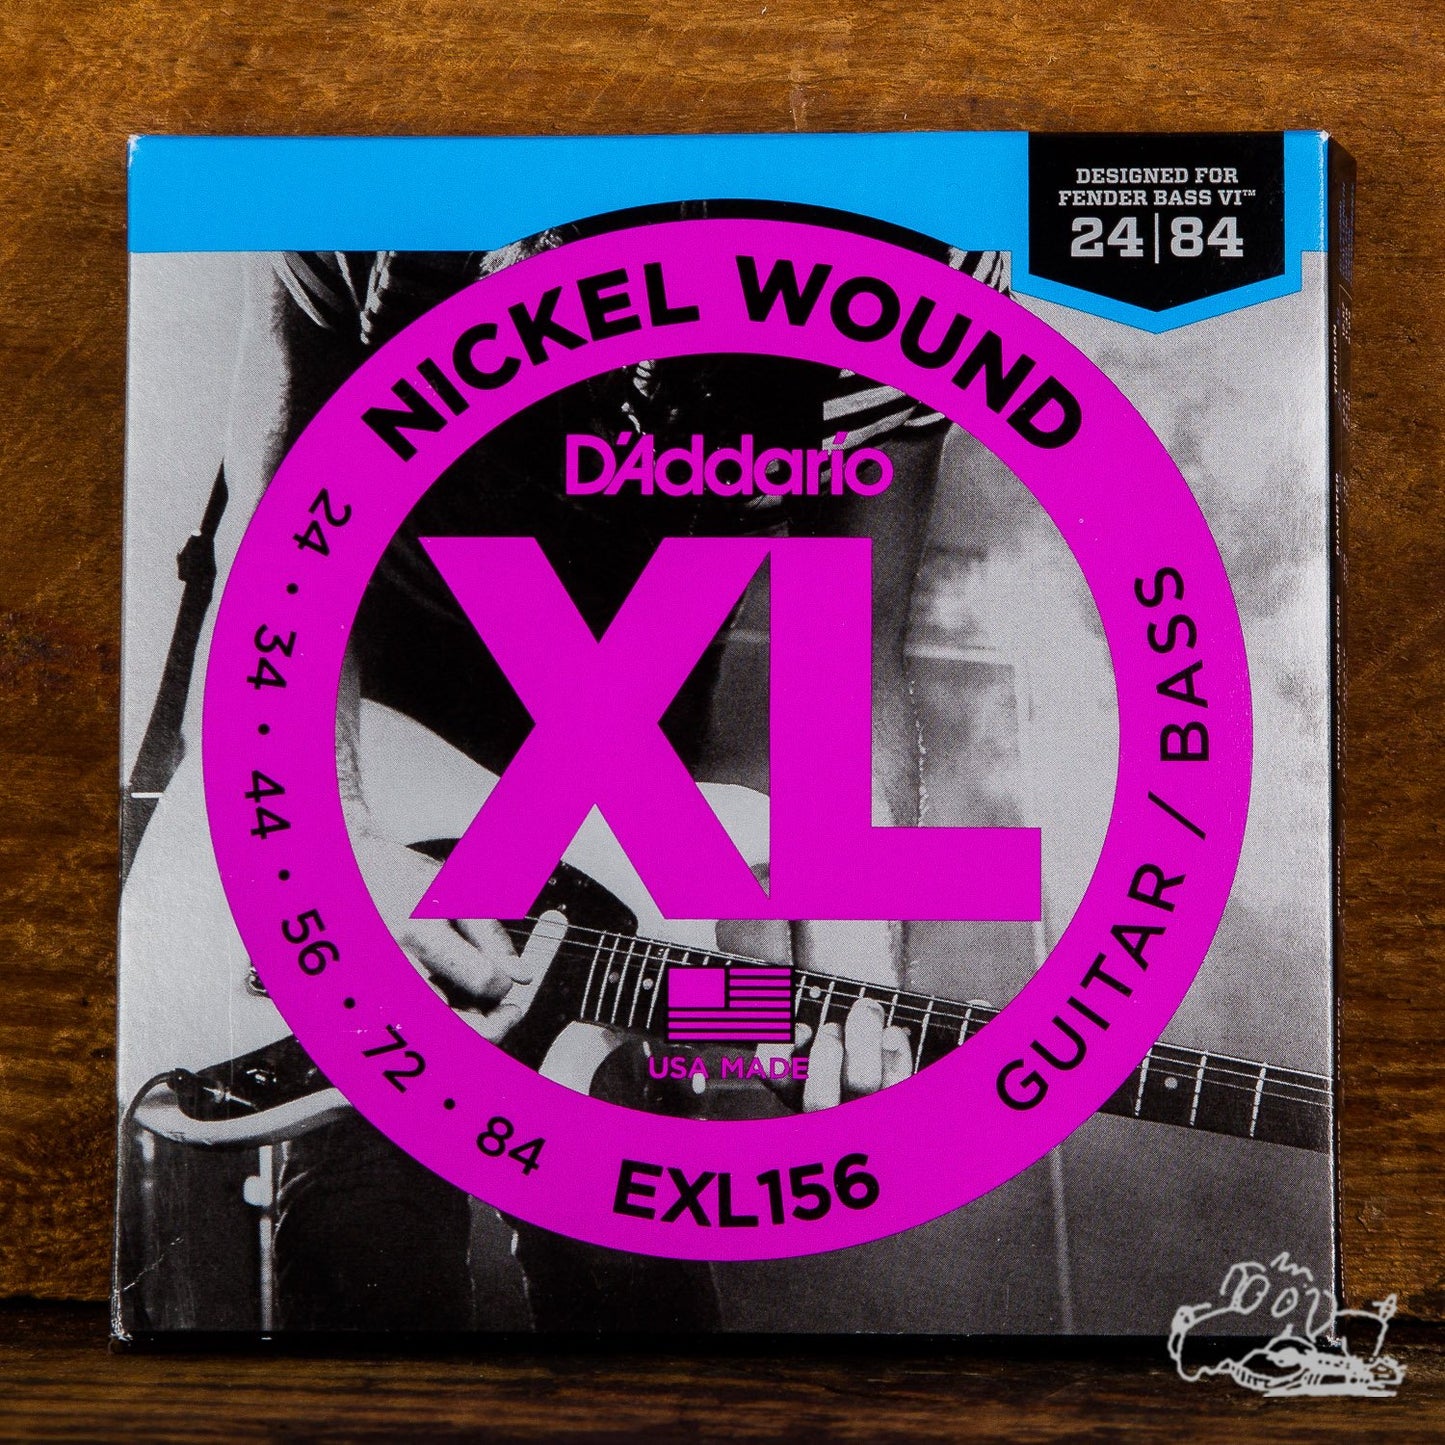 D'Addario XL Electric Bass VI Guitar Strings 24-84